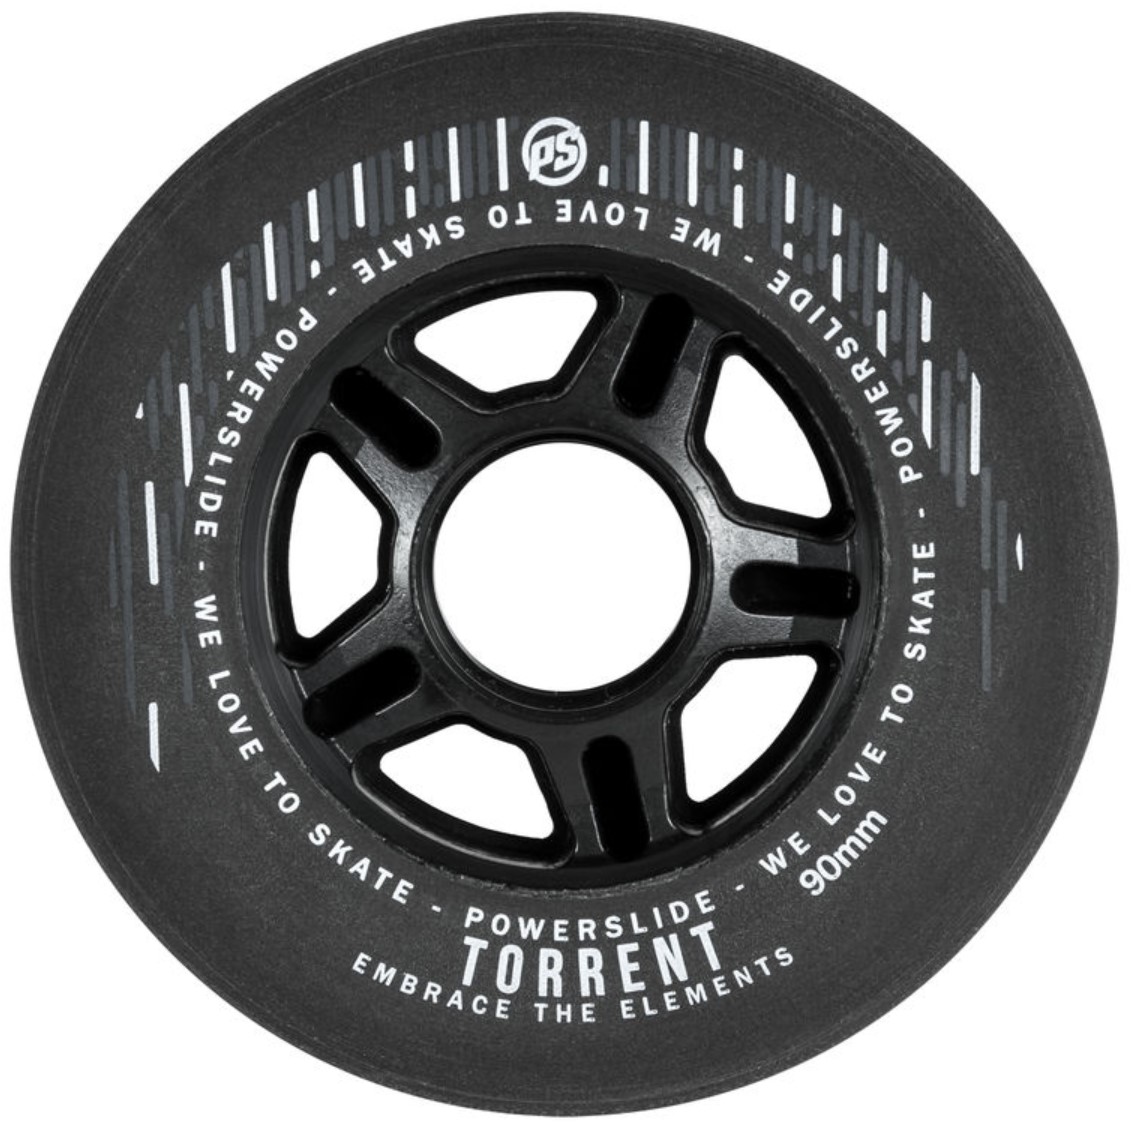 Torrent rain wheels 90 mm for inline skating